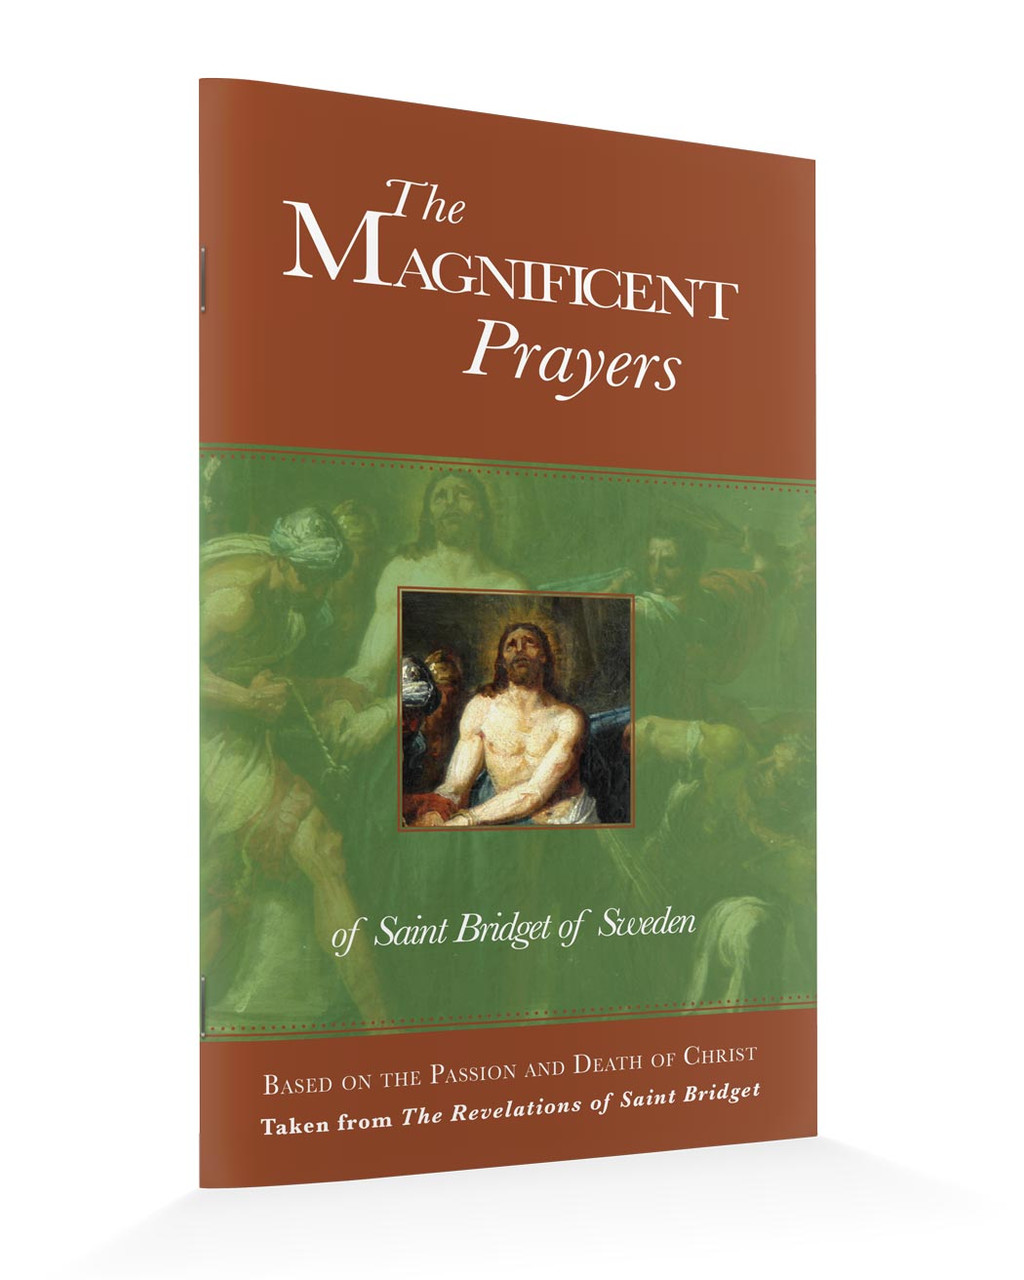 The Twelve Year Prayers of St. Bridget on the Passion of Jesus